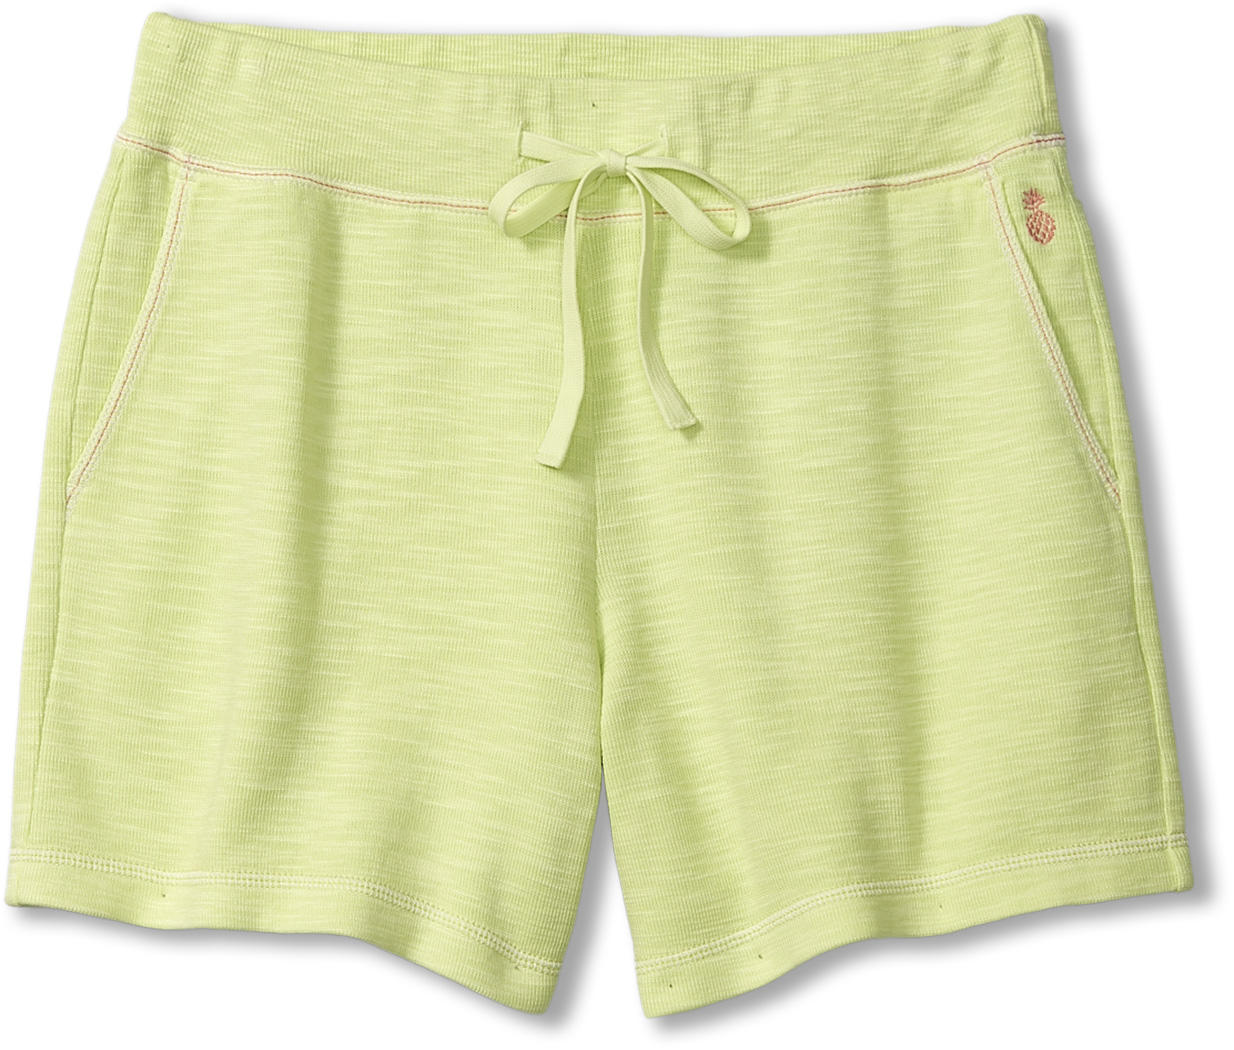 Tobago Bay 5-Inch Shorts